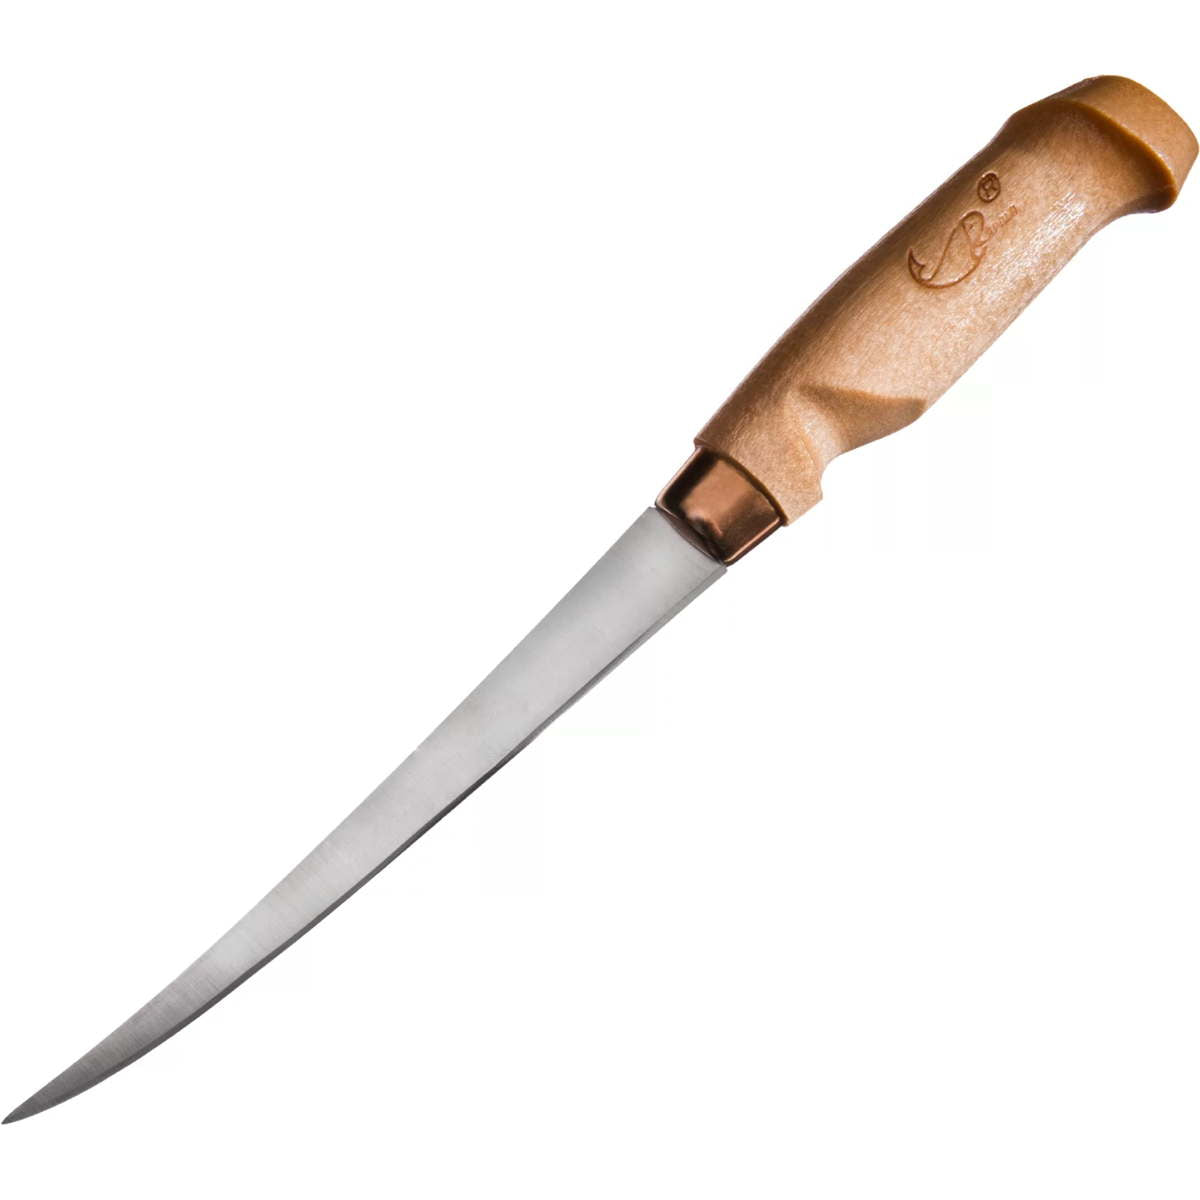 Photo of Rapala Fish 'N Fillet Knife for sale at United Tackle Shops.